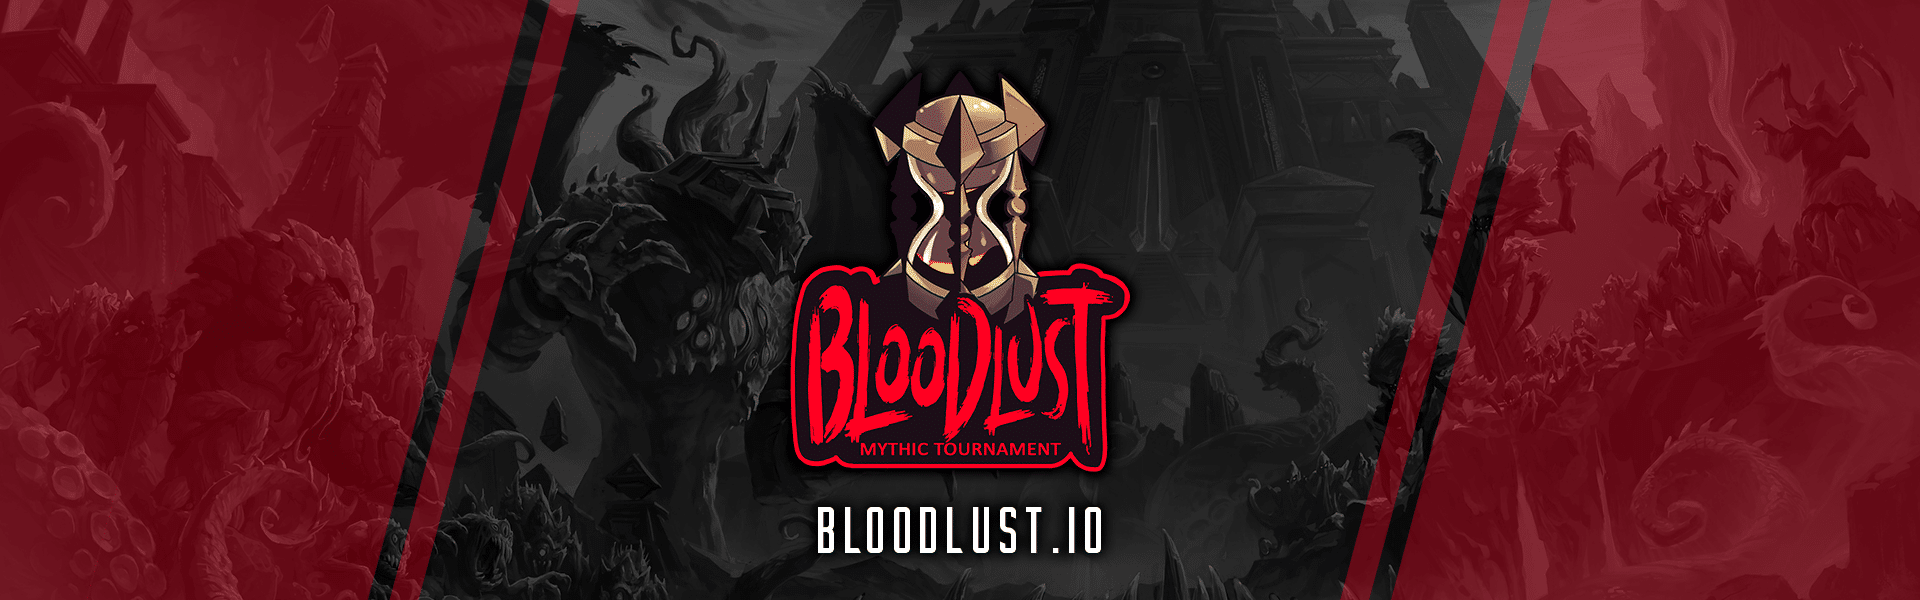 Llega la Bloodlust Mythic Tournament